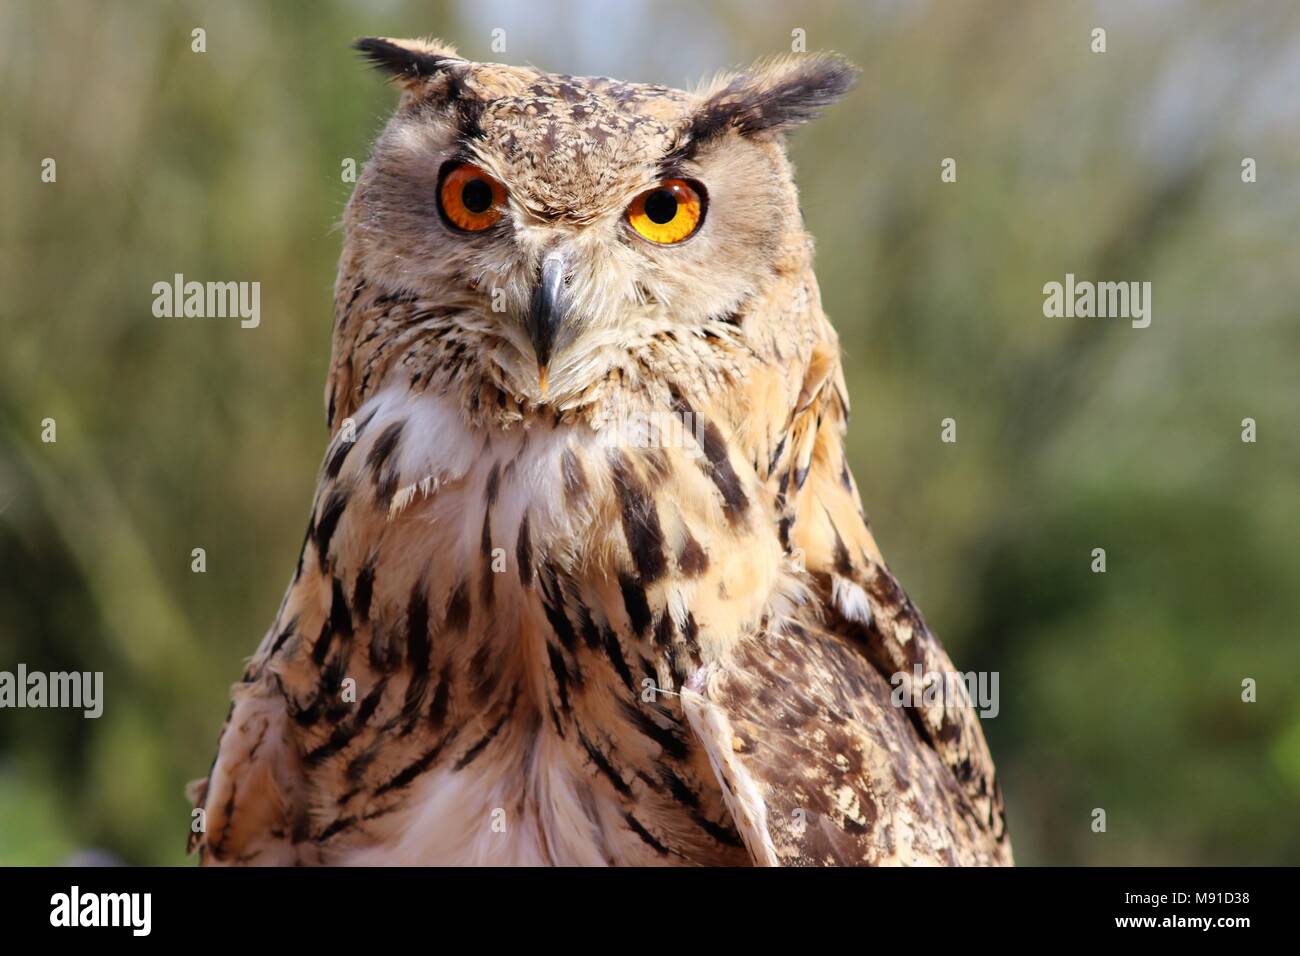 Brown Owl looking forward with big eyes, UK Stock Photo